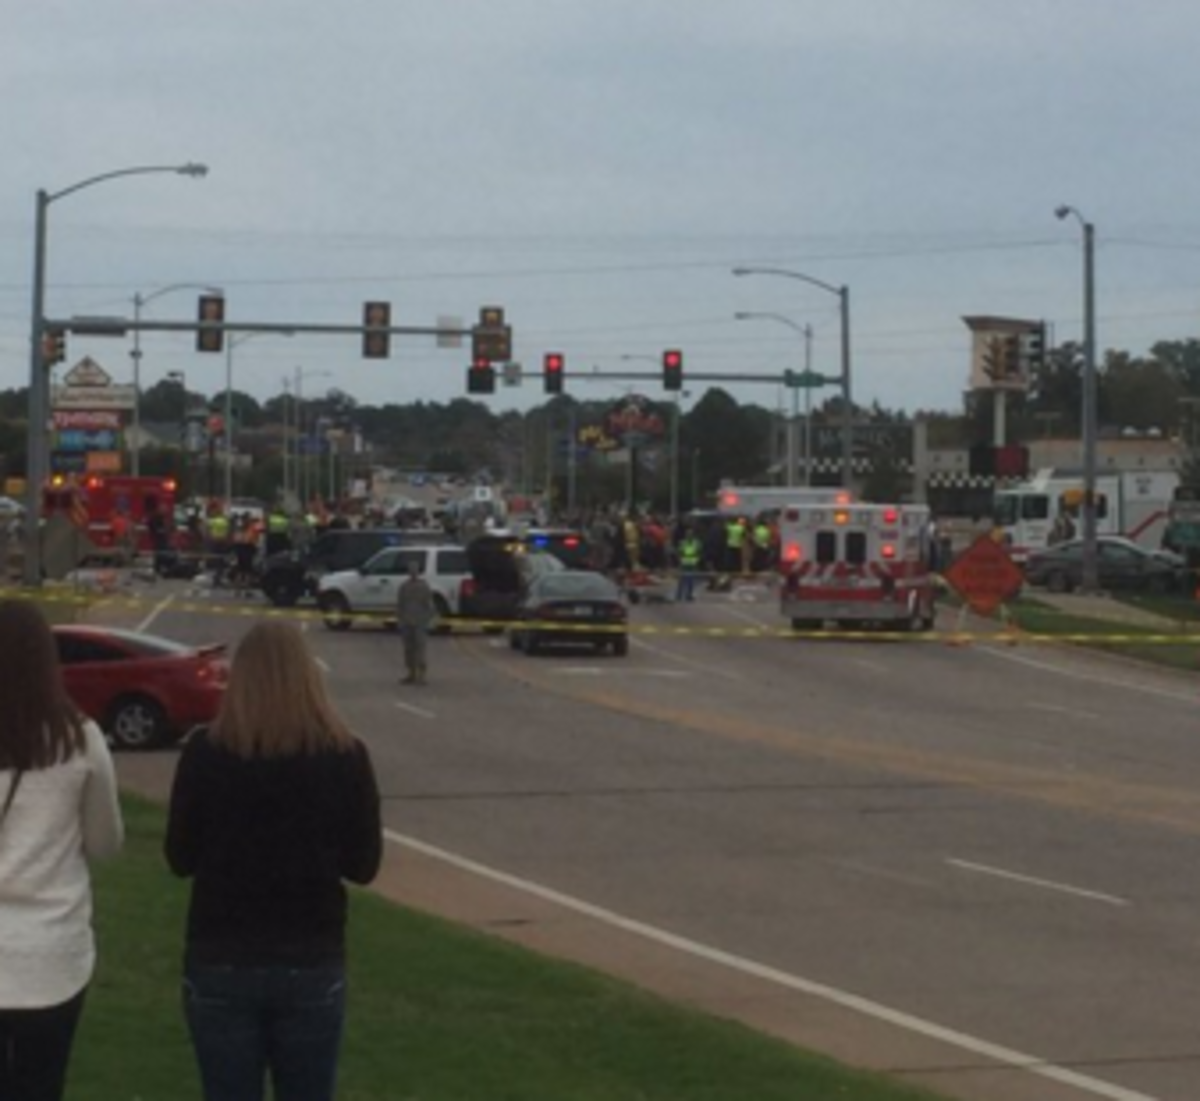 Scene of tragic car crash at Oklahoma State's homecoming.